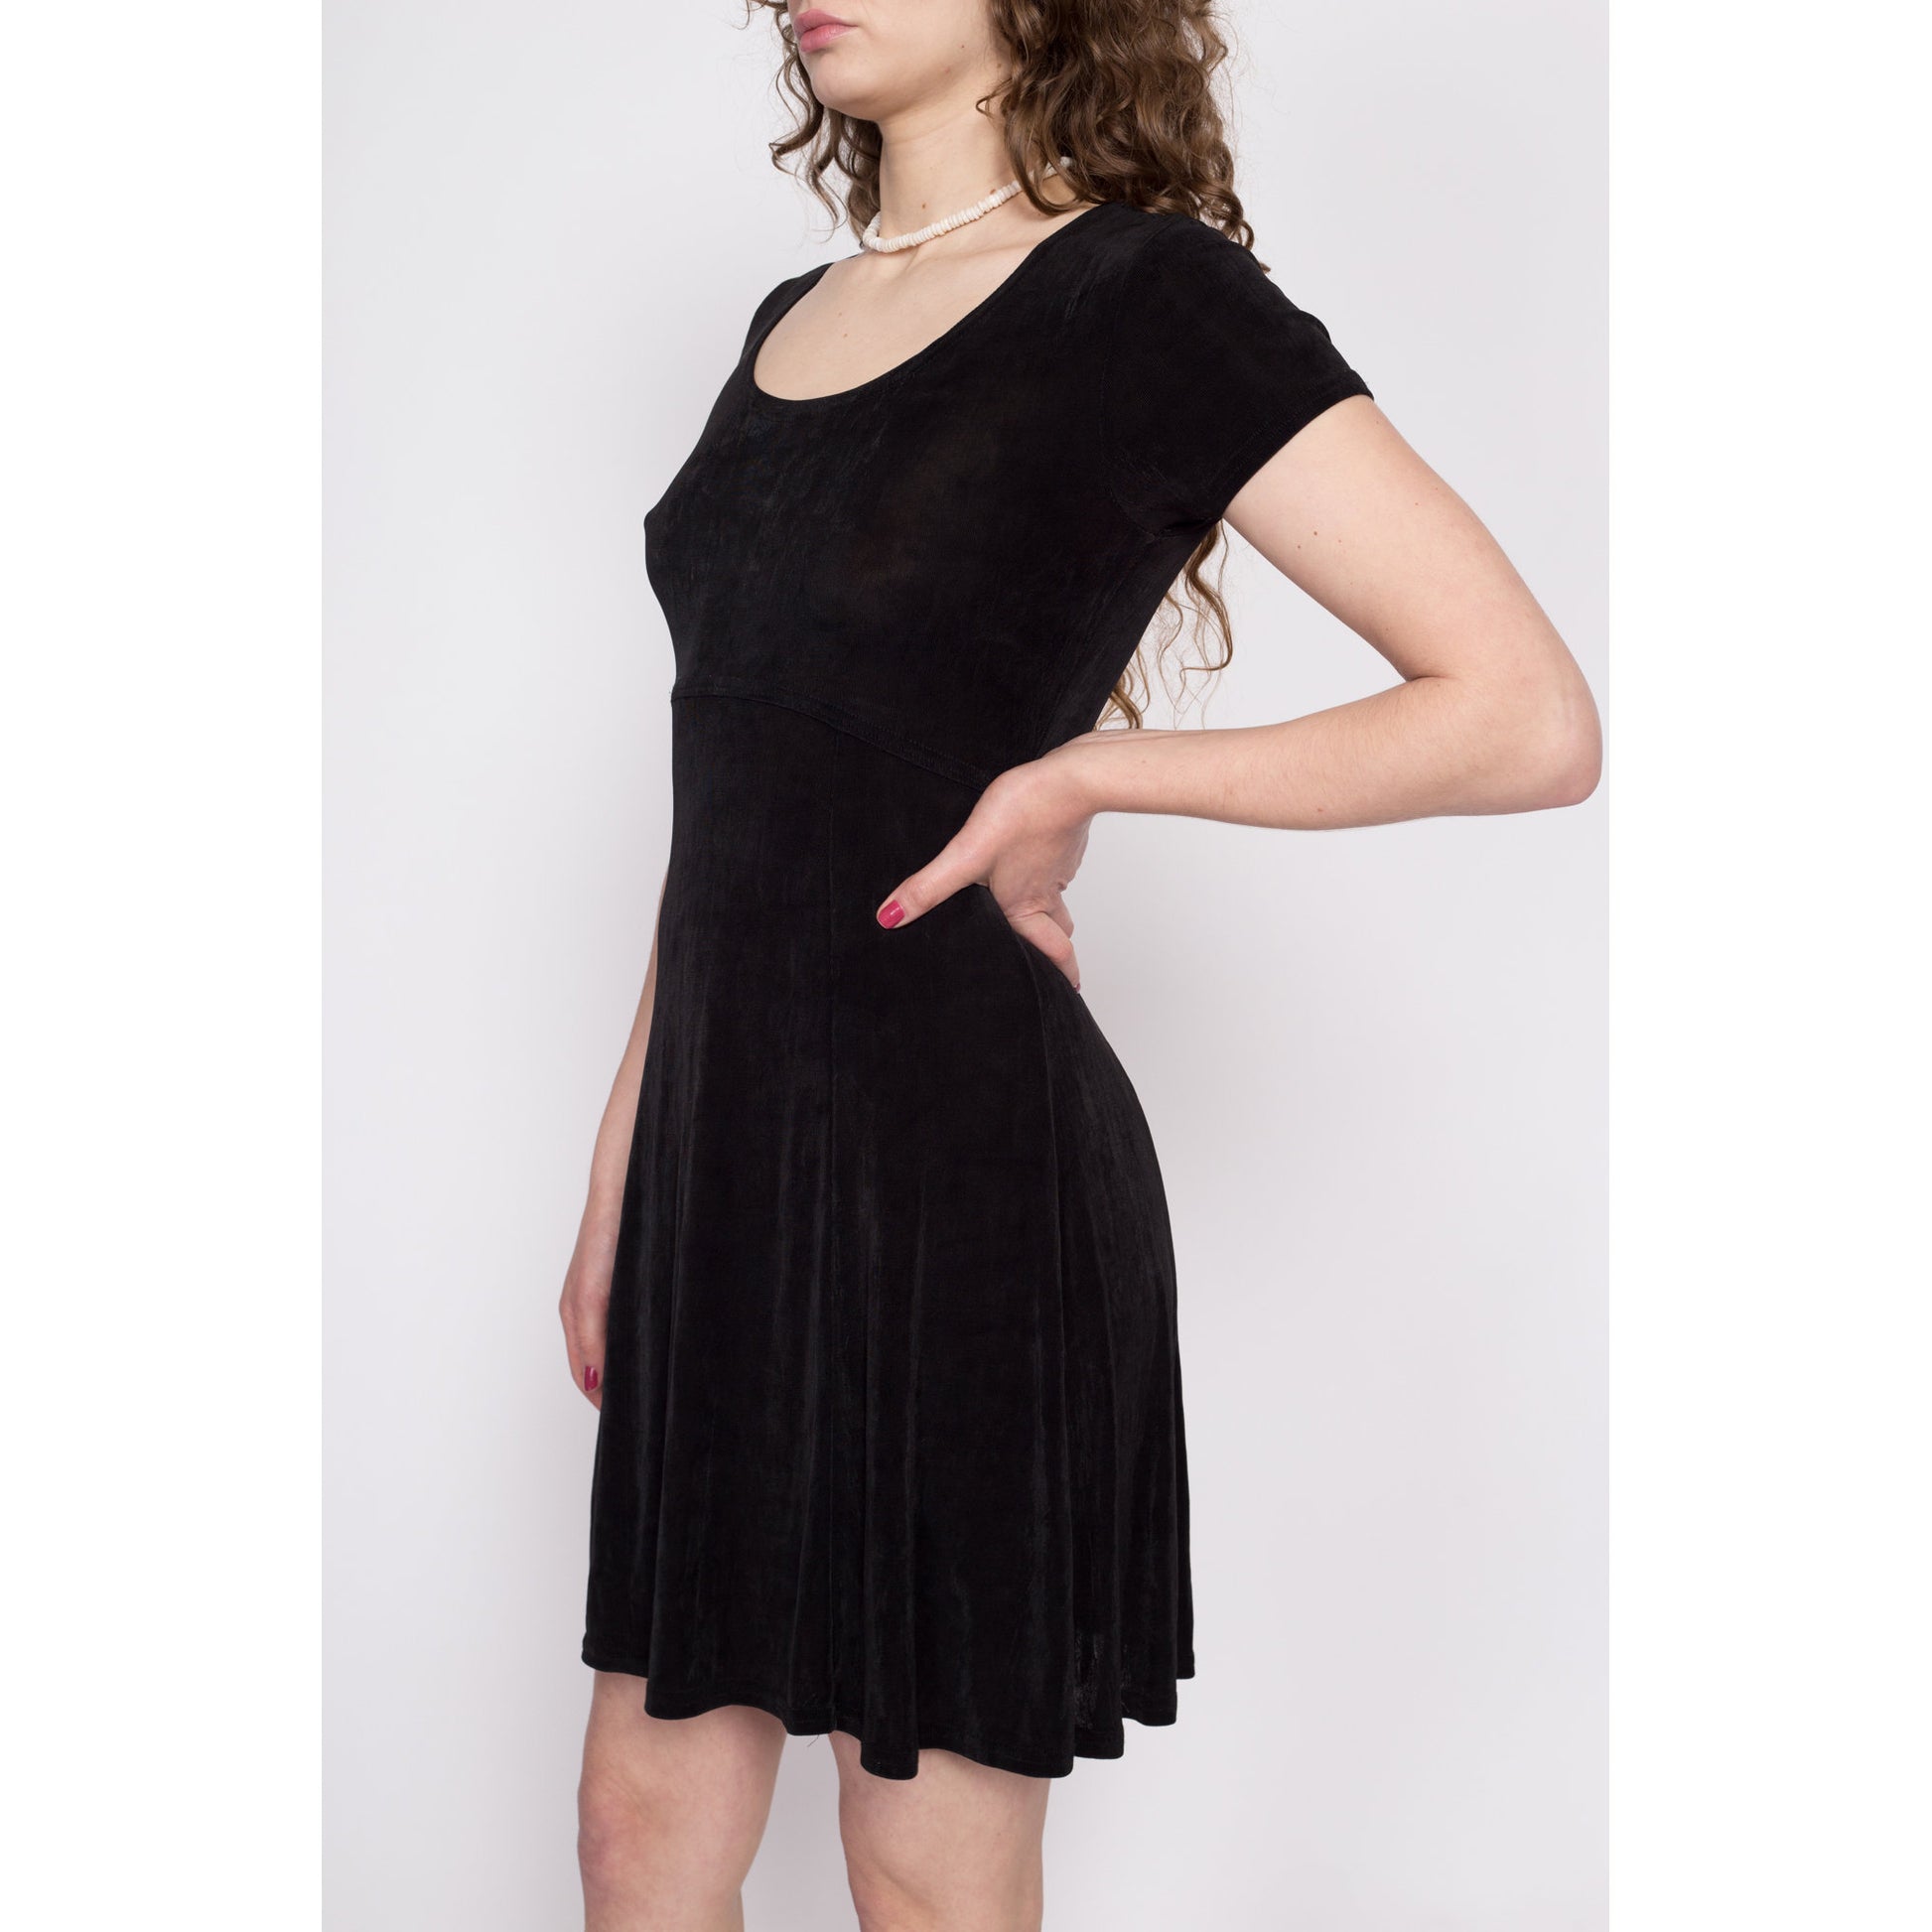 90s Minimalist Black Slinky Mini Dress - Small to Medium | Vintage Short Sleeve Stretchy Scoop Neck Grunge Dress